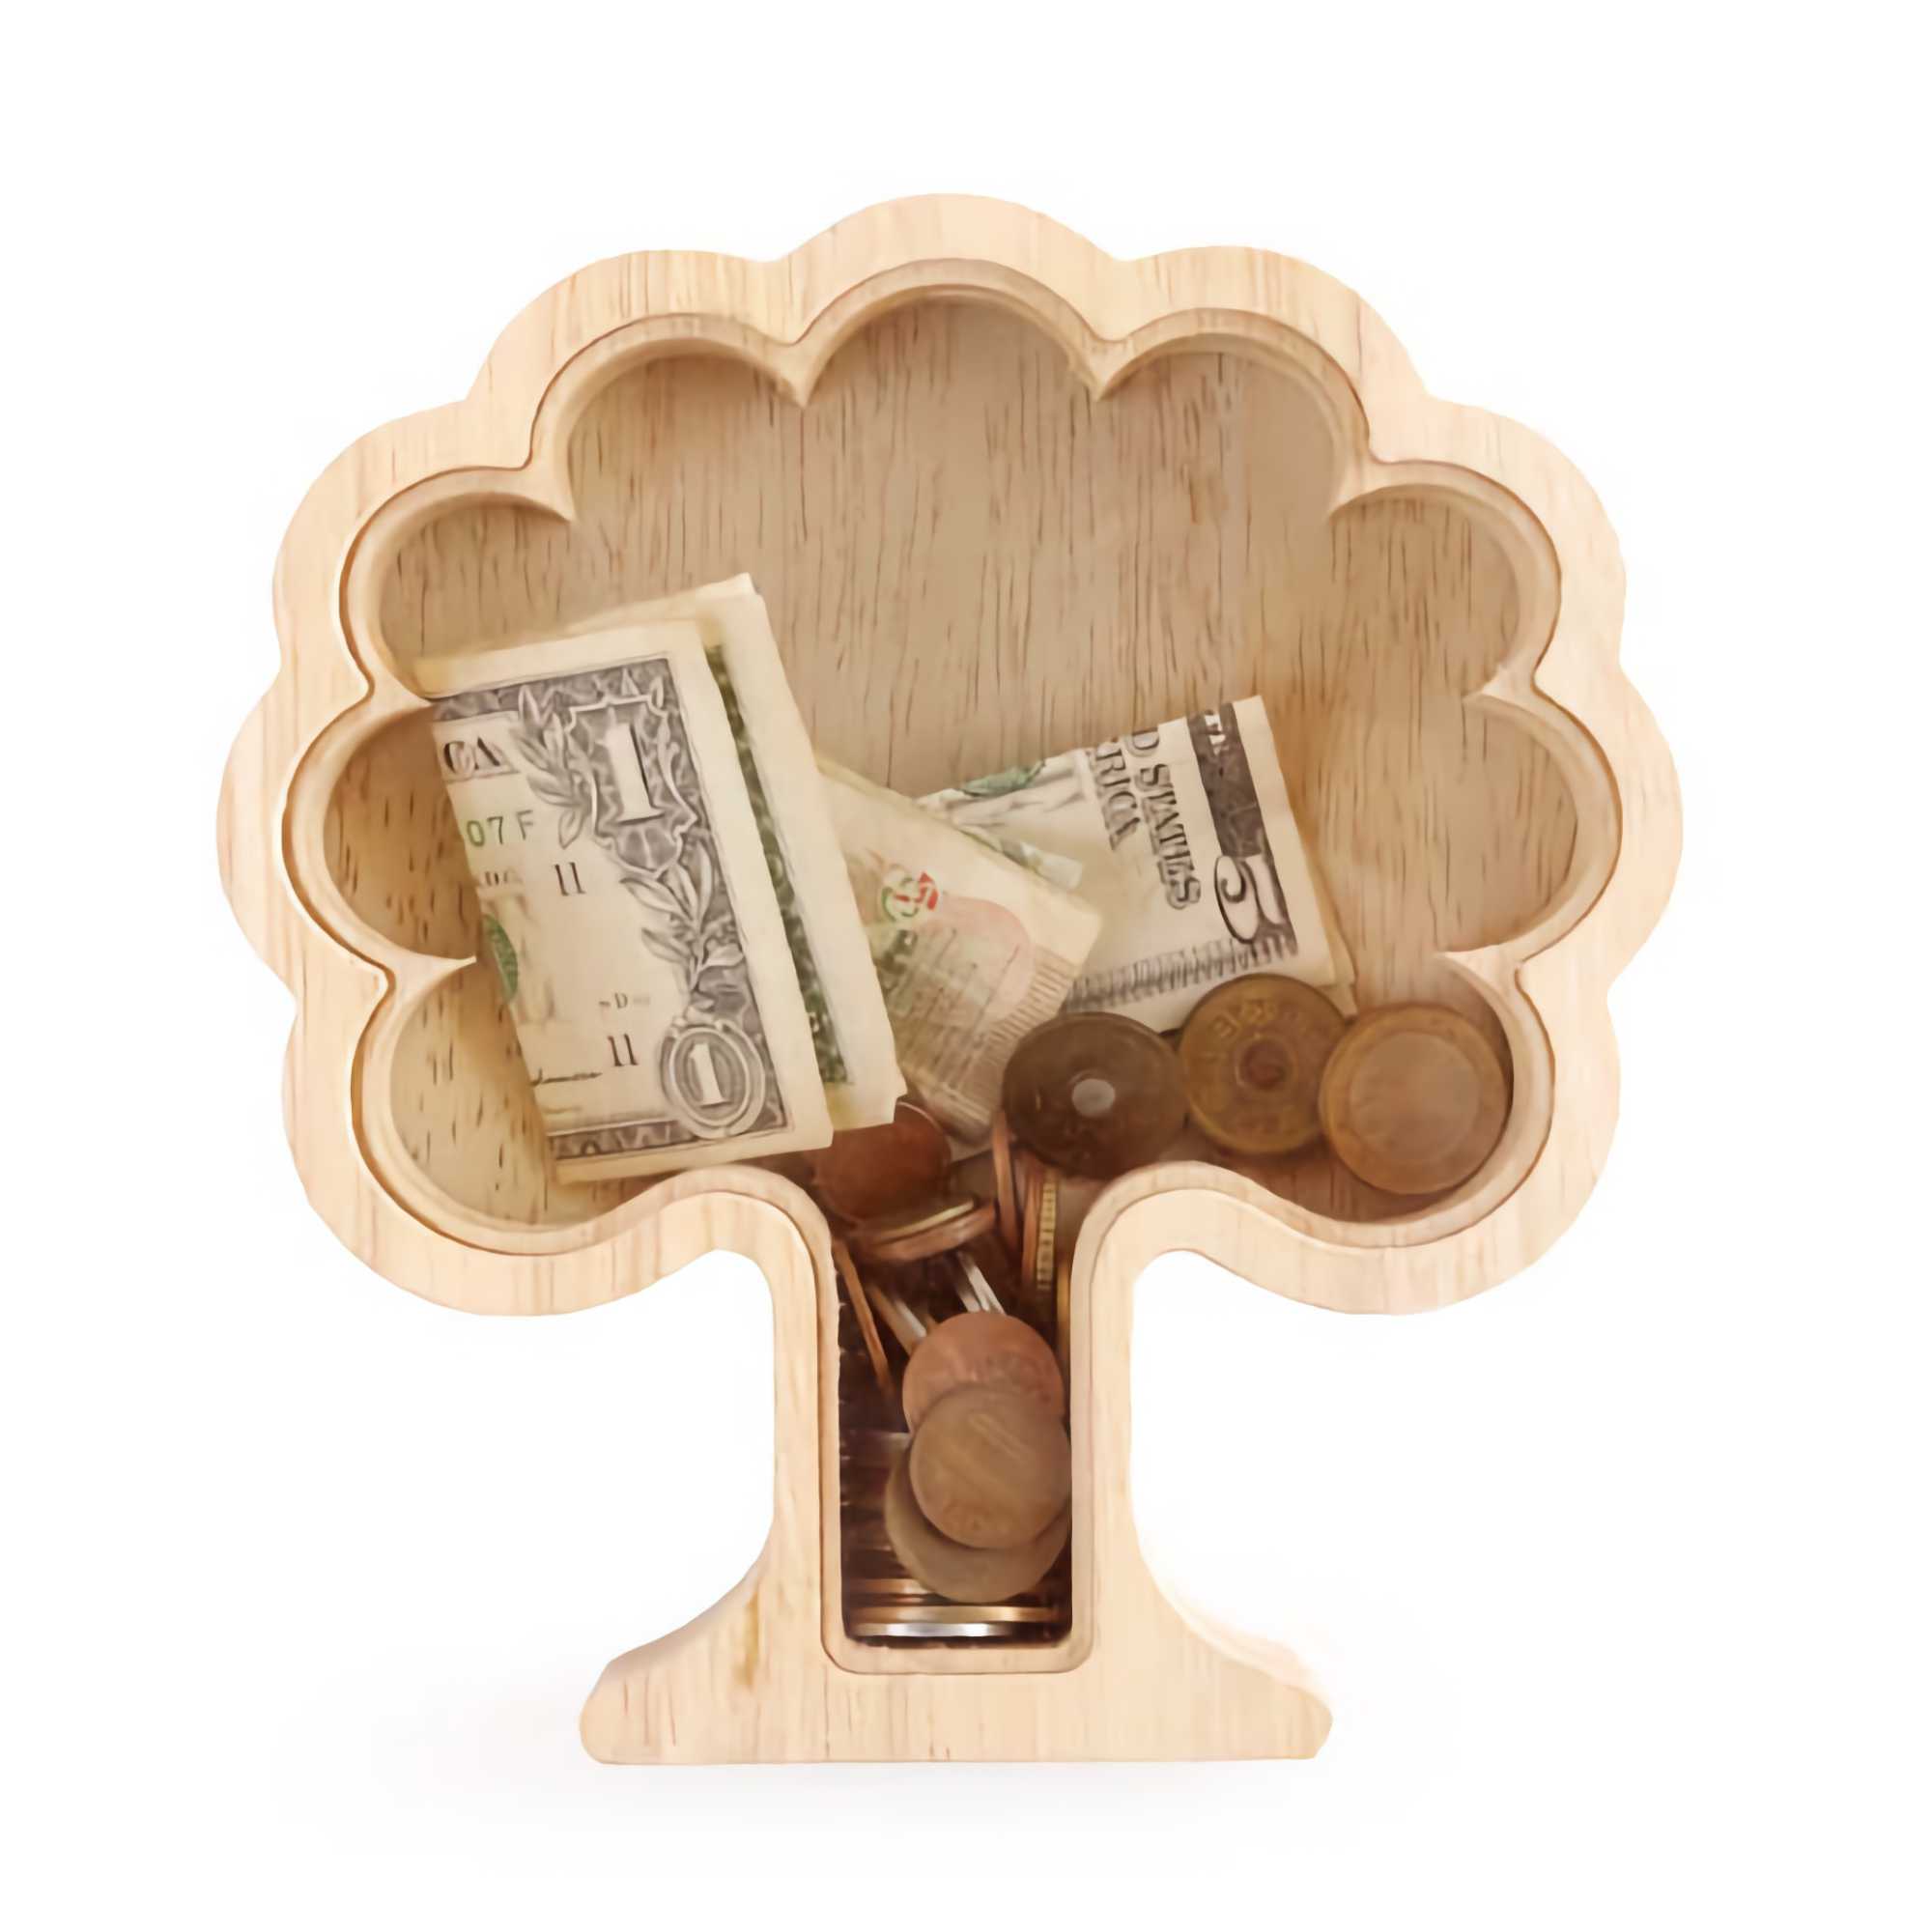 Kikkerland Design Wooden Savings Money Tree Coin Bank